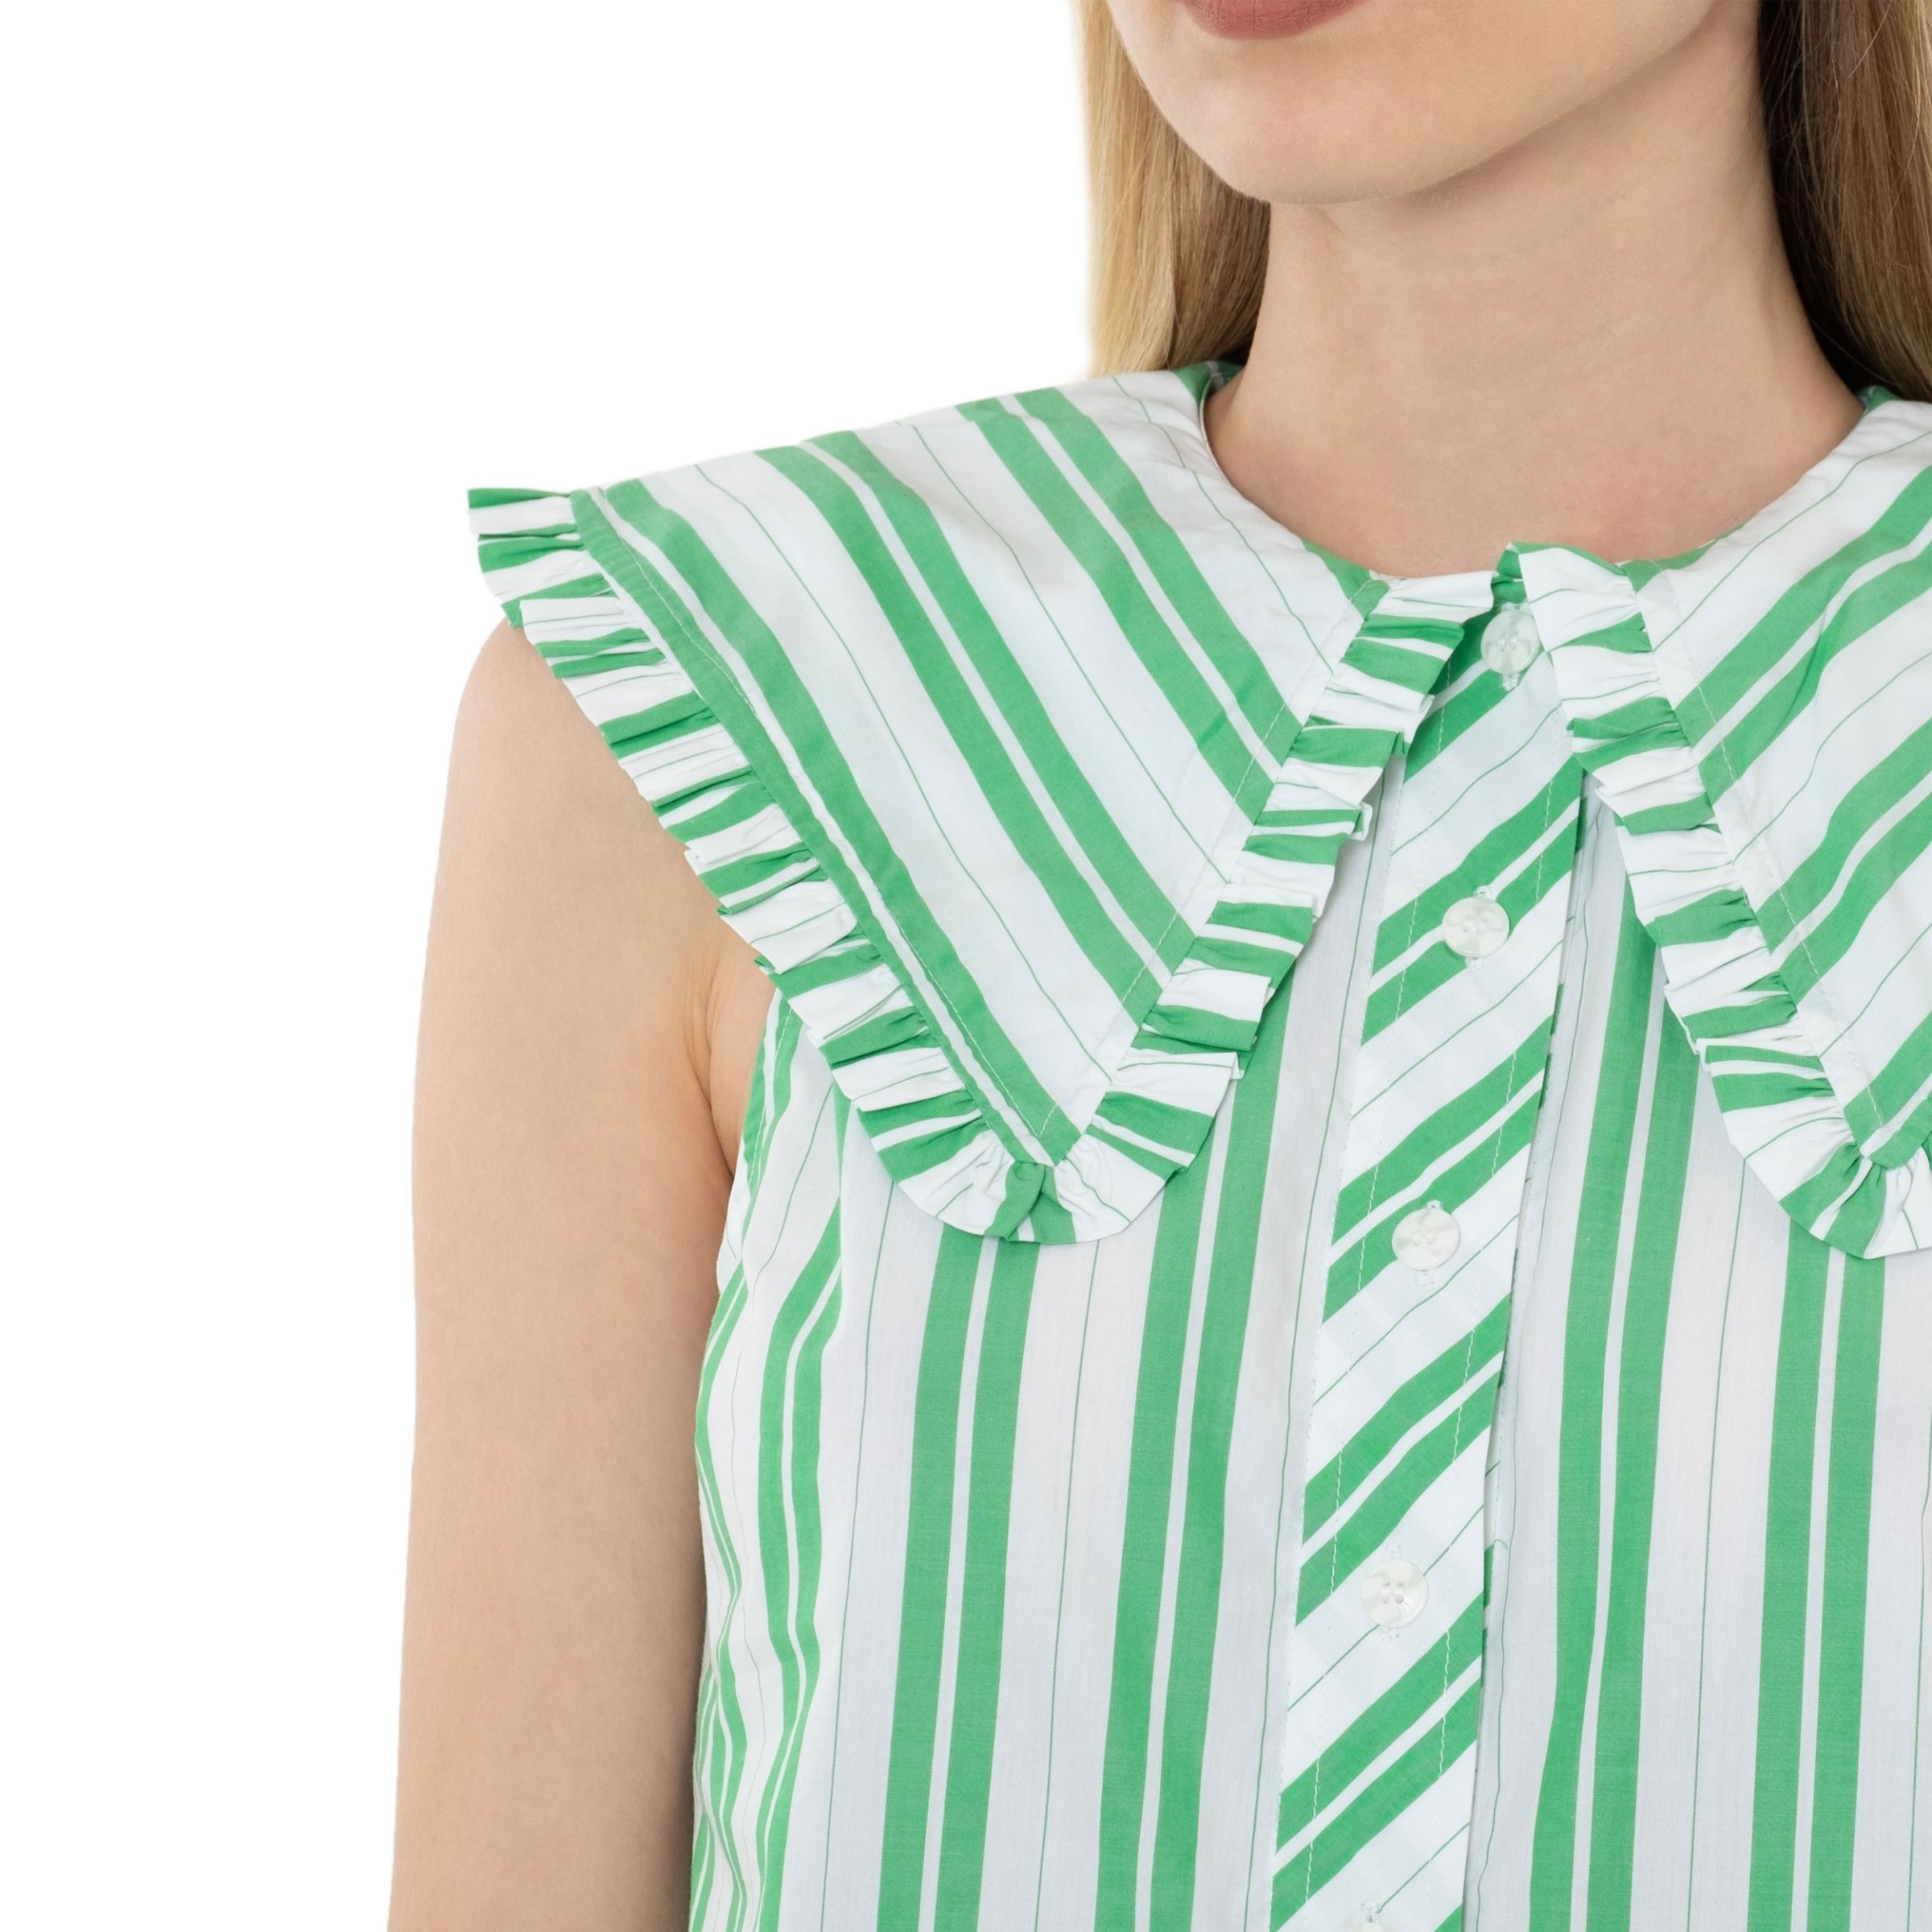 Рубашка Ganni зеленая